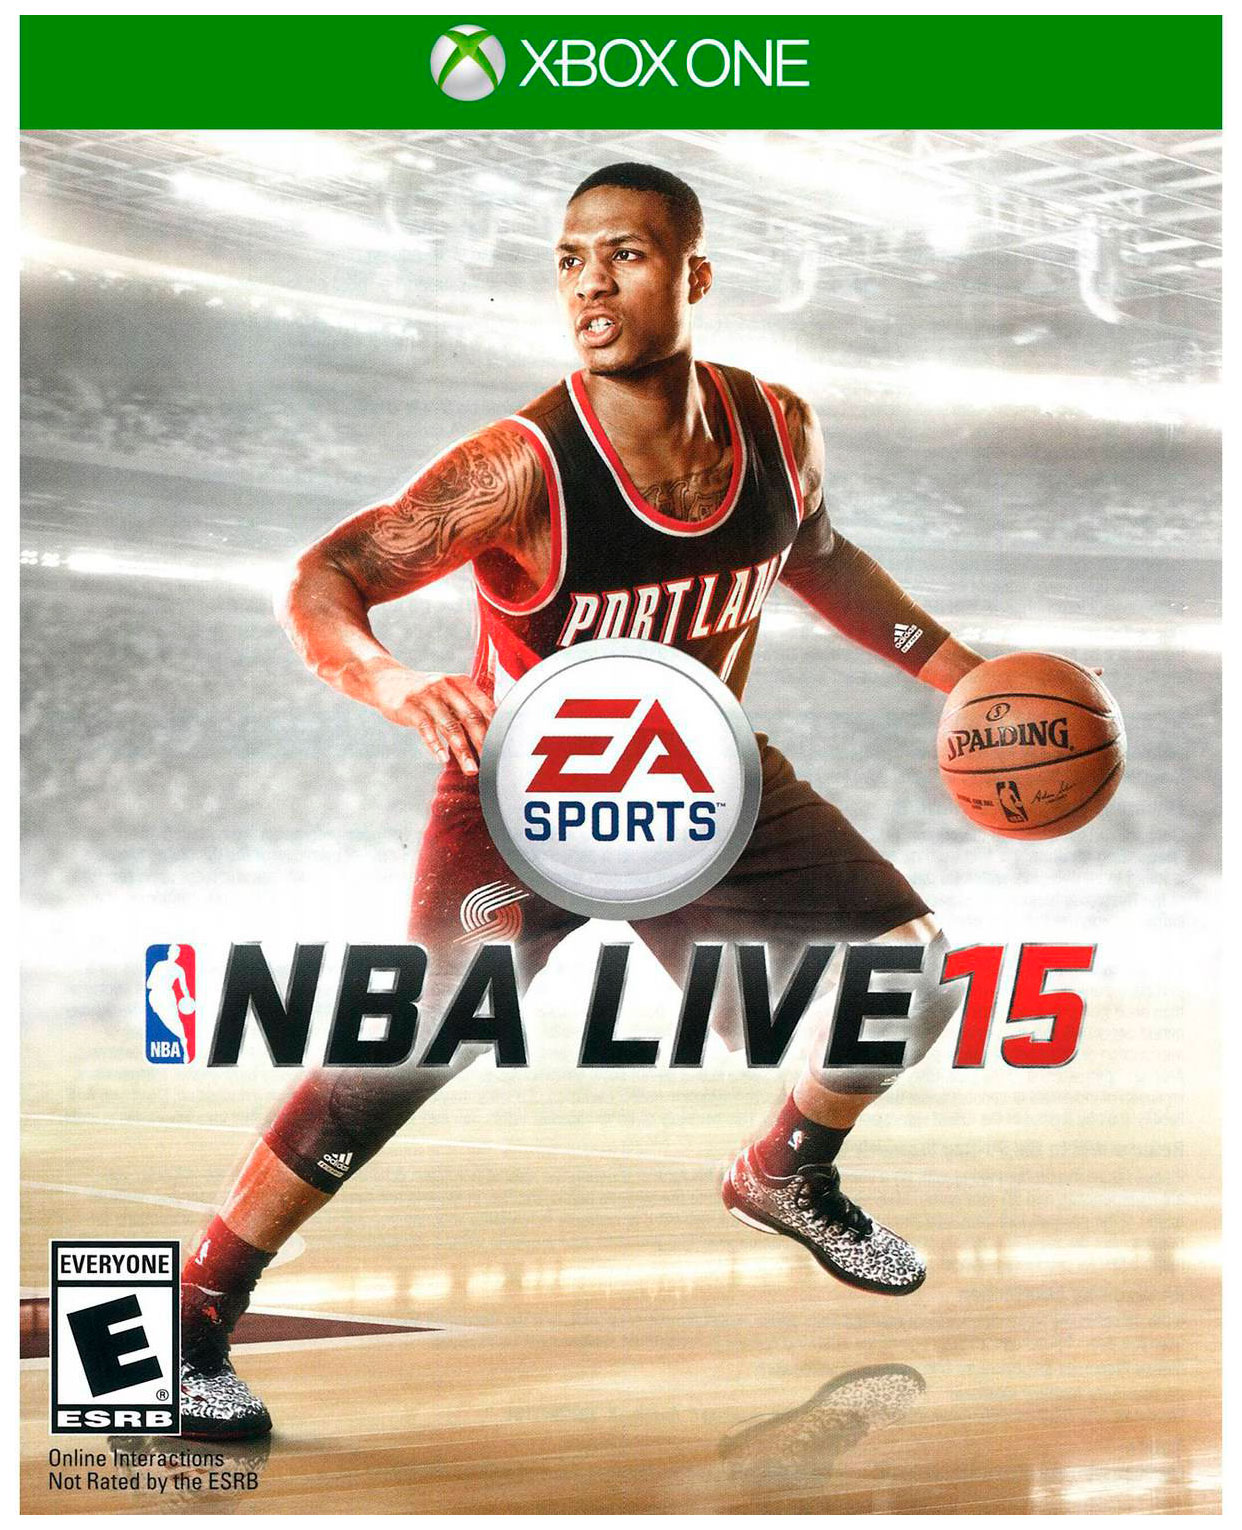 Игра NBA Live 15 для Xbox One